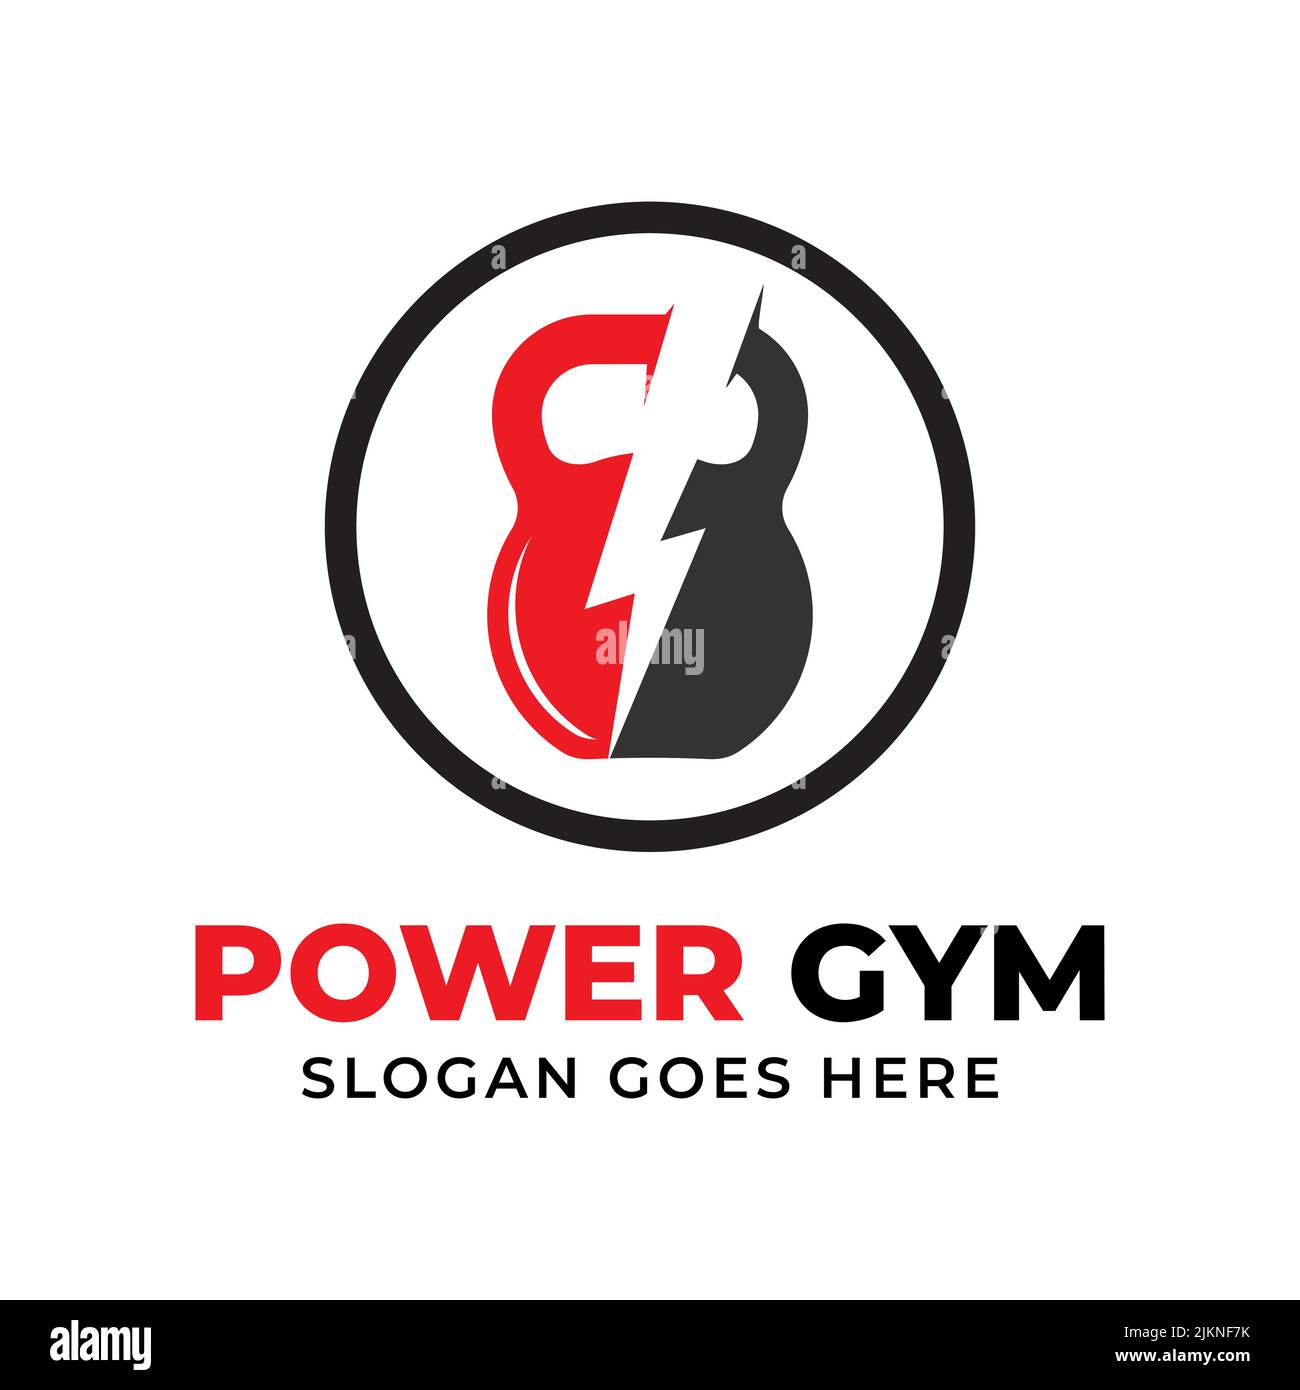 Power gym fitness center logo design badge vector with biceps holding lightning, best for gym training logo brand template Stock Vector